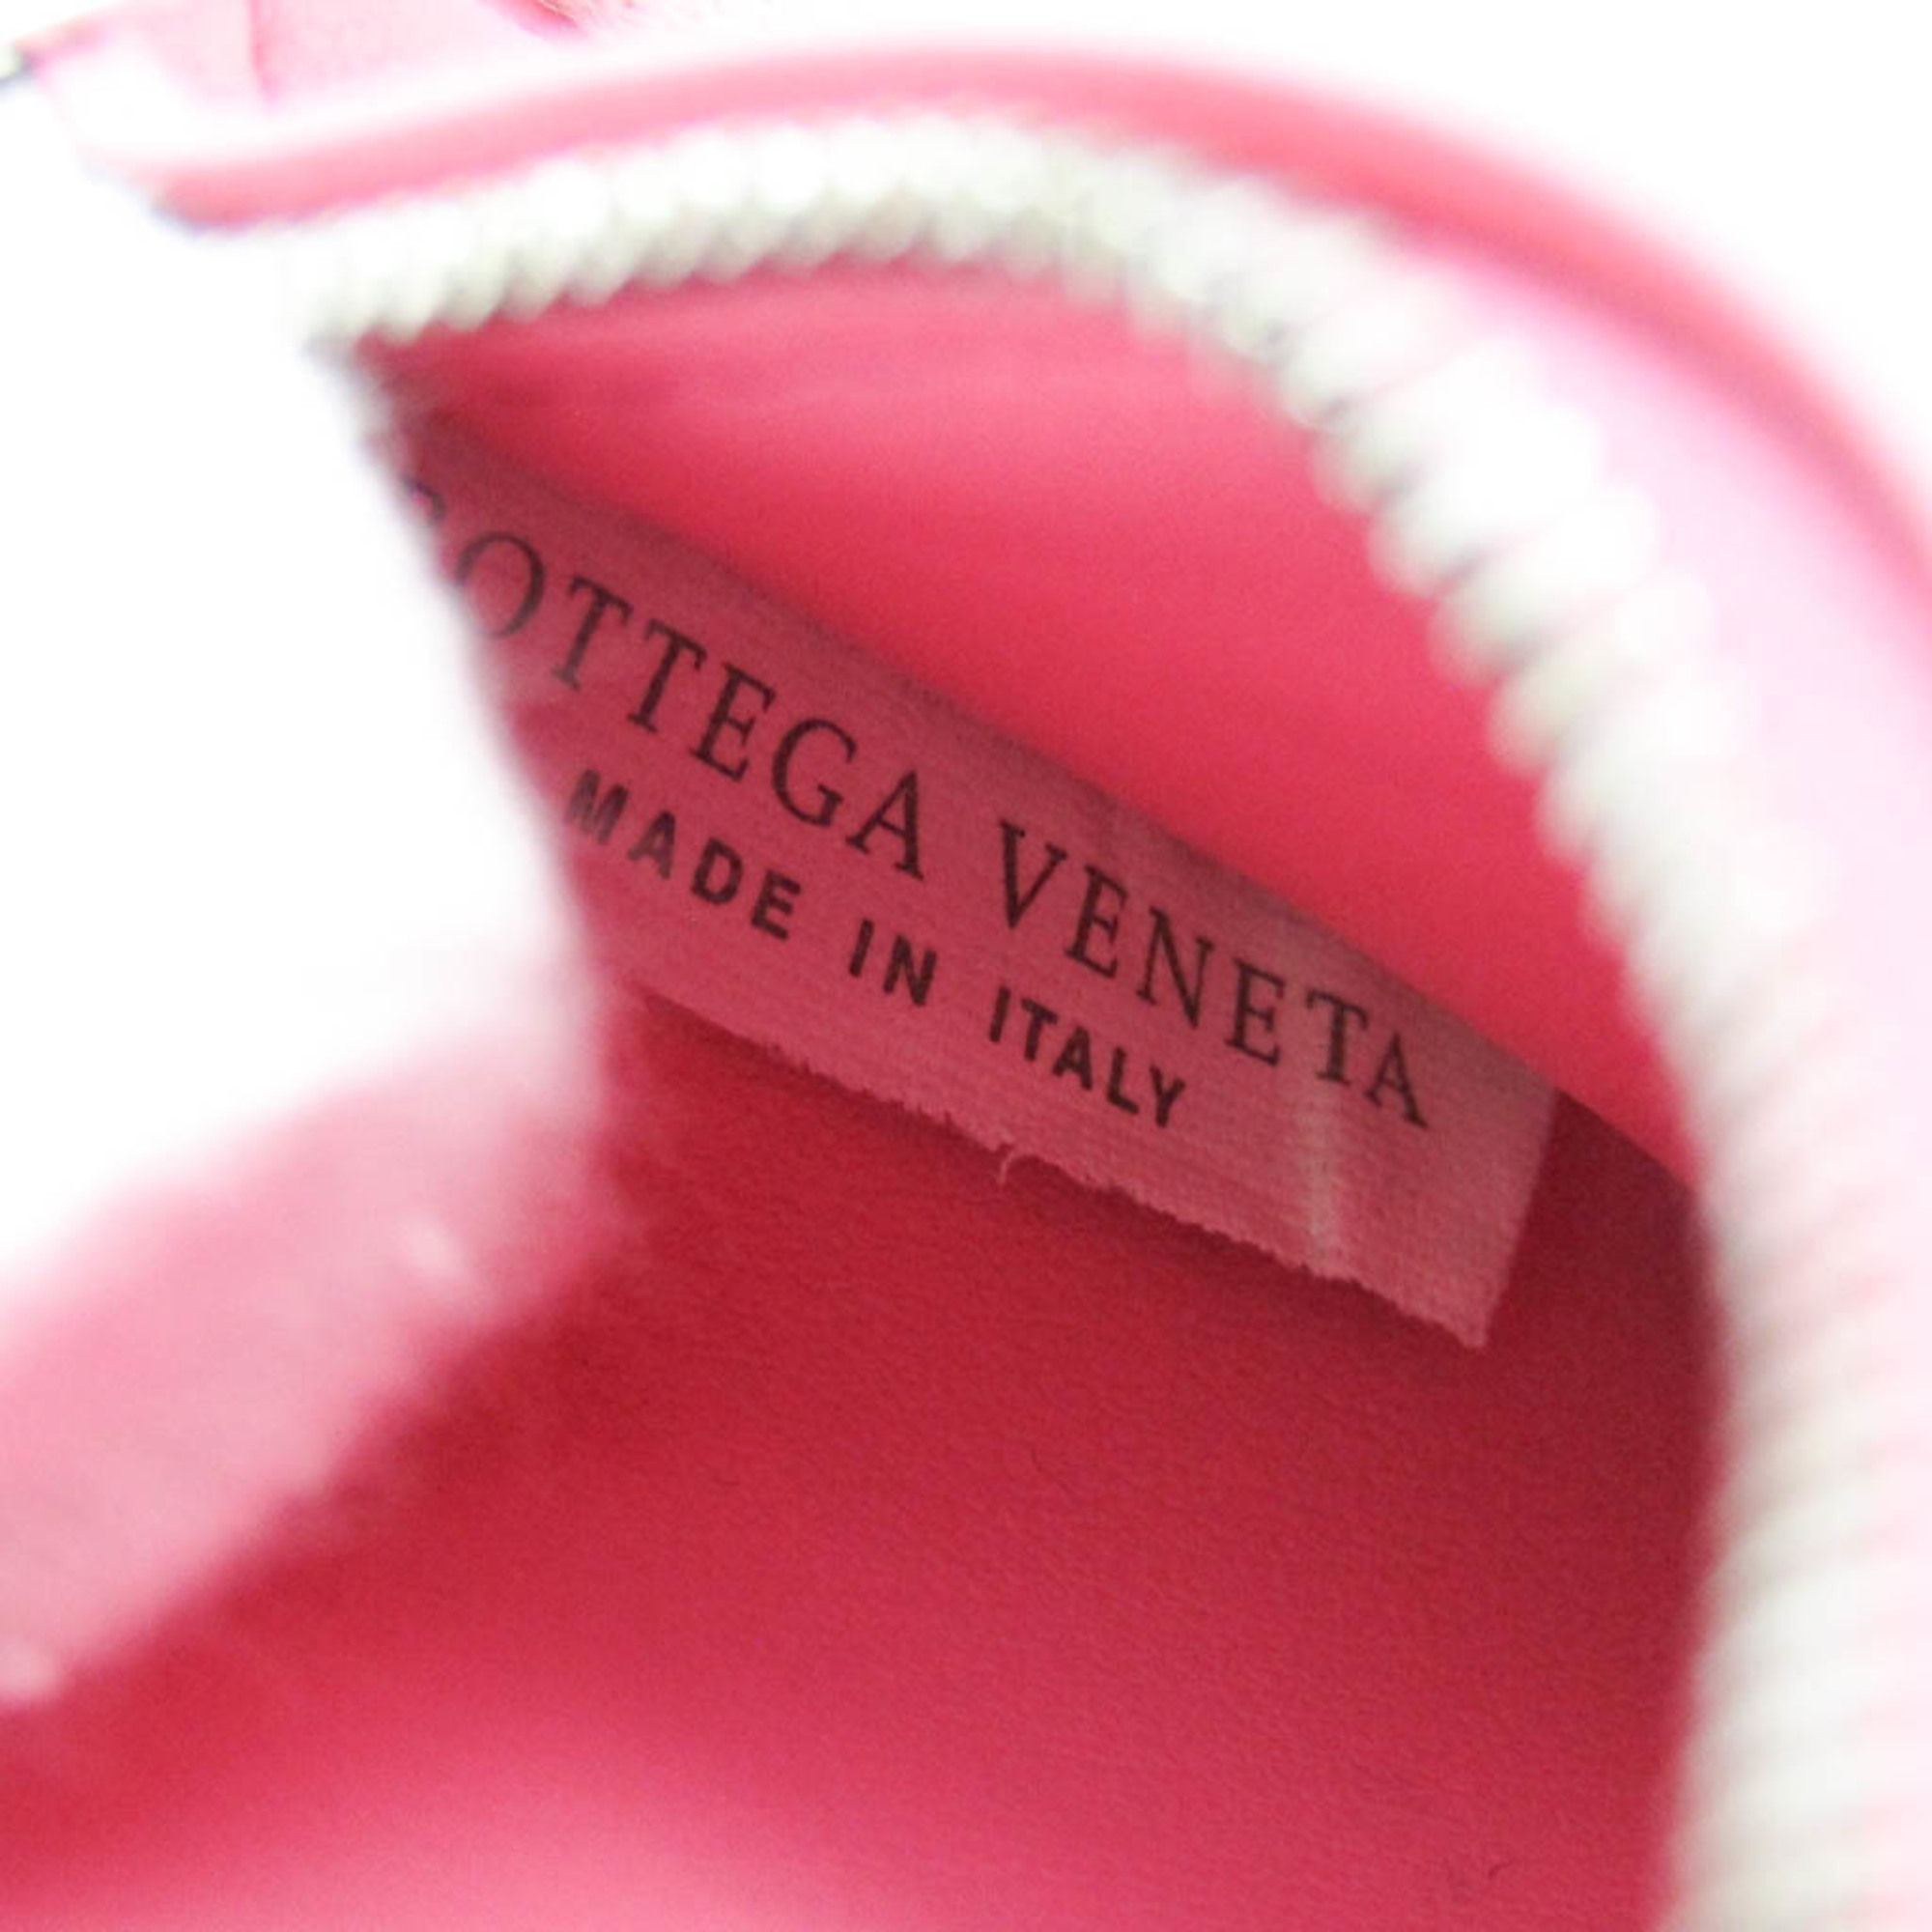 Bottega Veneta Intrecciato 635043 Leather Card Case Light Pink